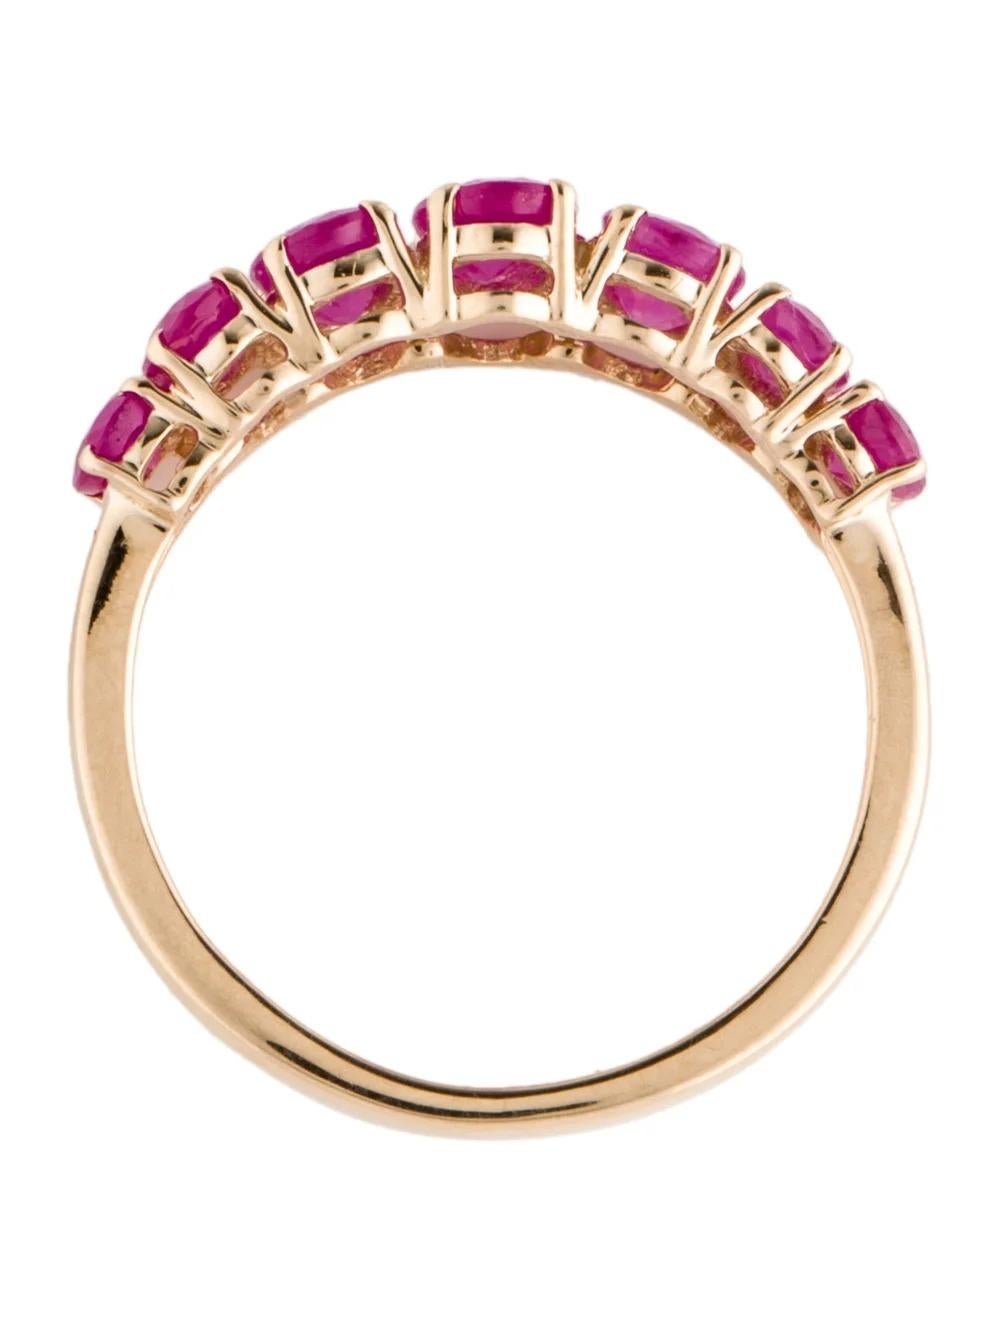 Women's 14K Ruby Band Ring Size 8 - Vibrant Gemstone, Yellow Gold, Elegant Design For Sale